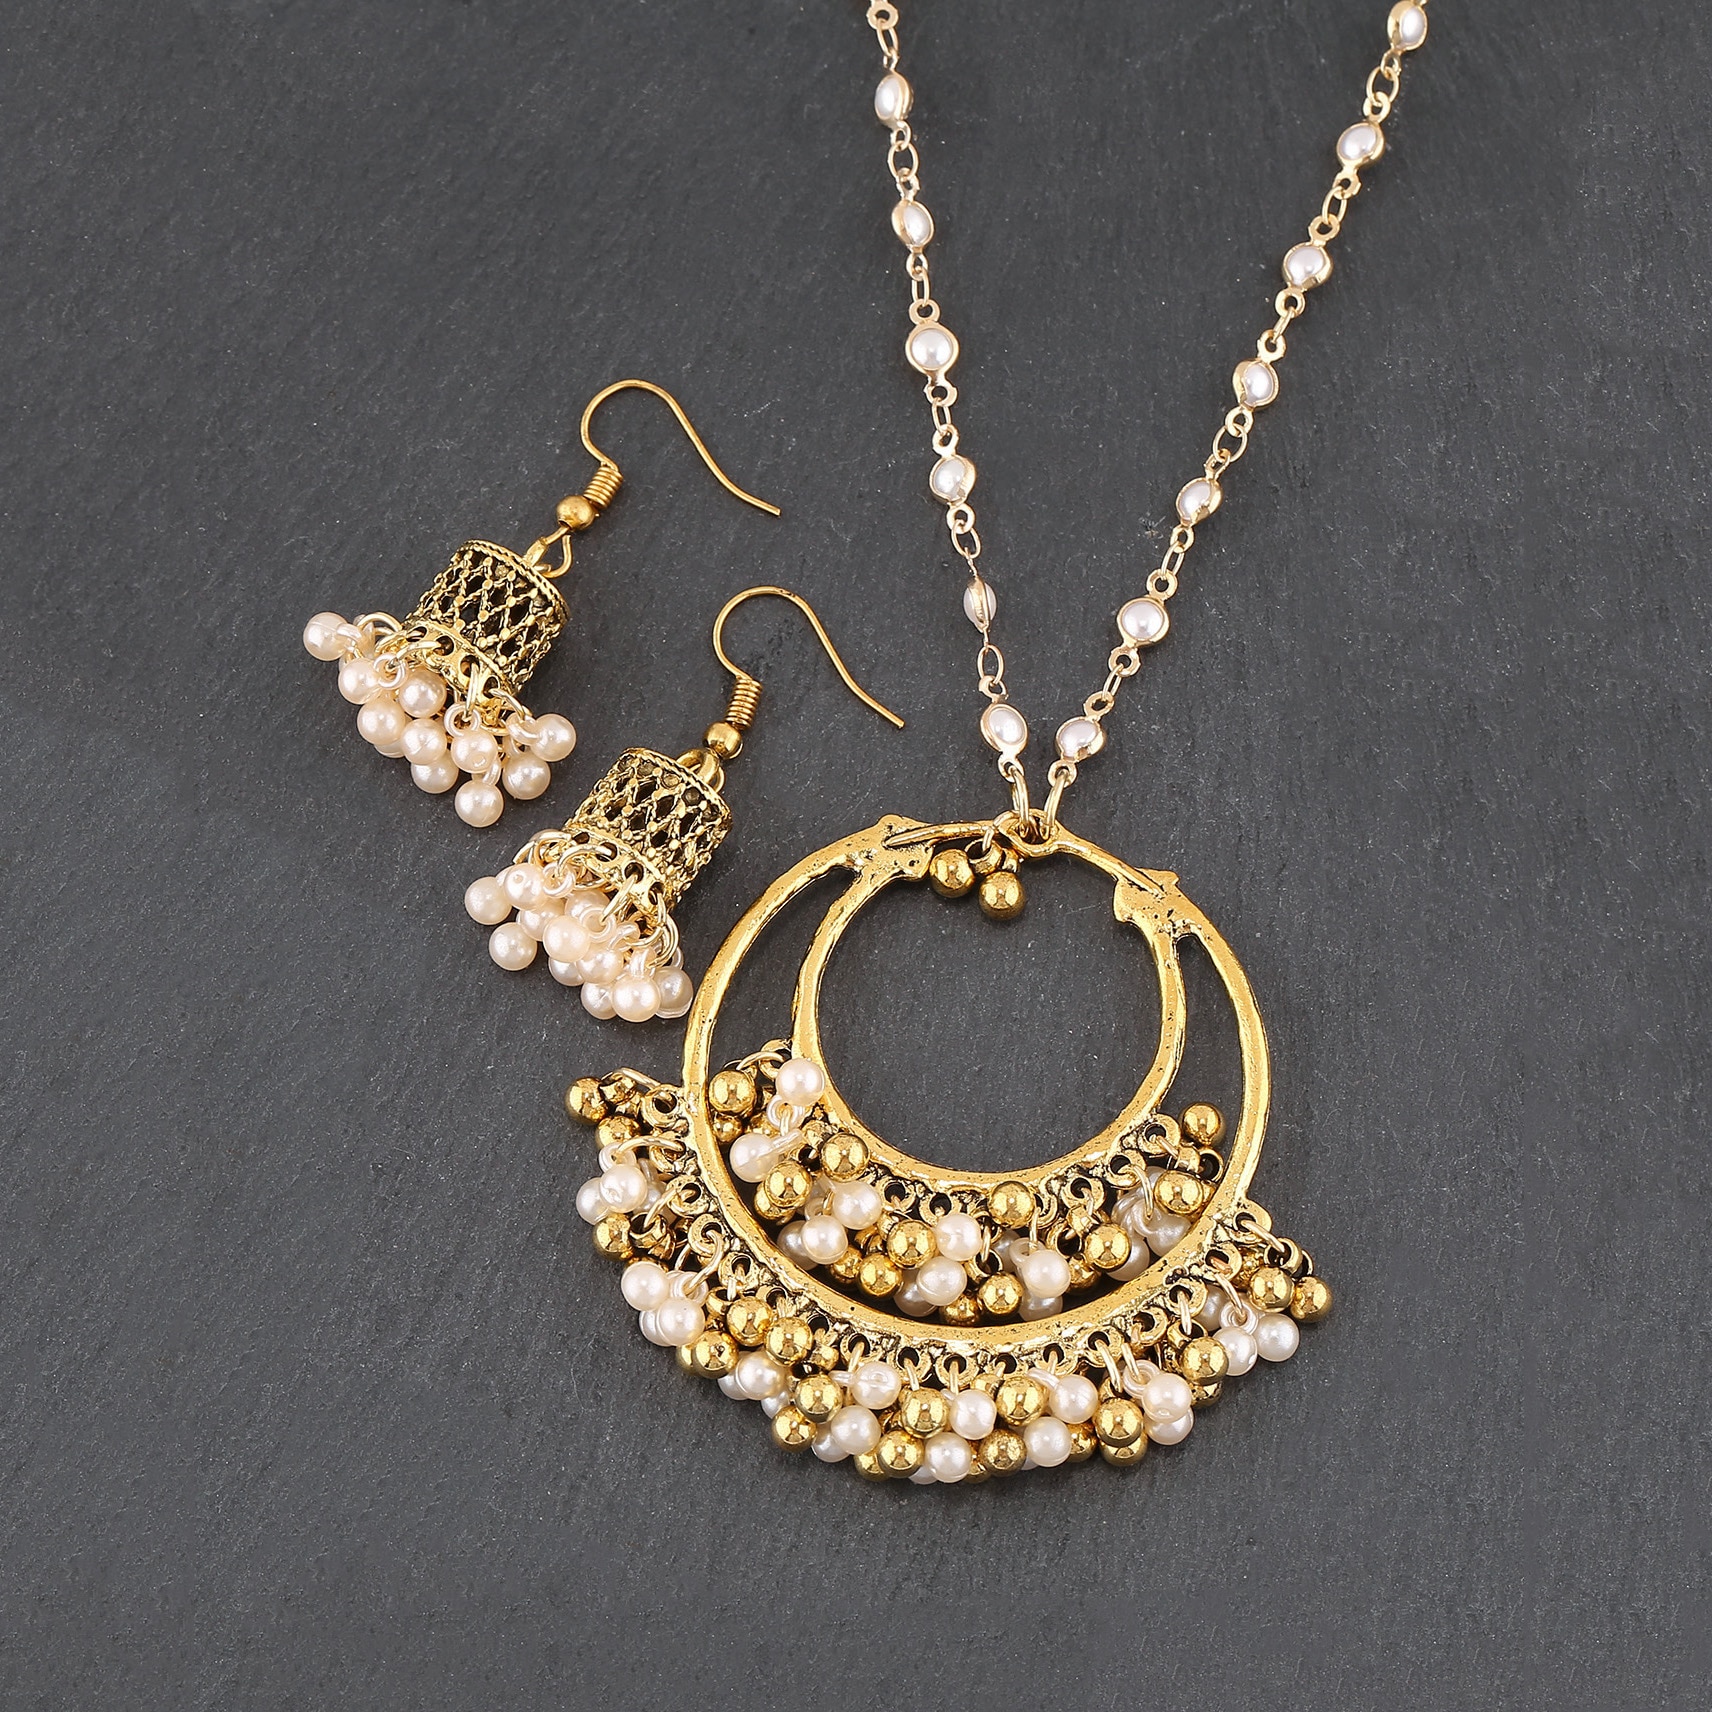 New-Women39s-Indian-Jewelry-Set-EarringNecklace-Wedding-Jewelry-Hangers-Luxury-Retro-Red-CZ-Geometry-1005004536295375-5